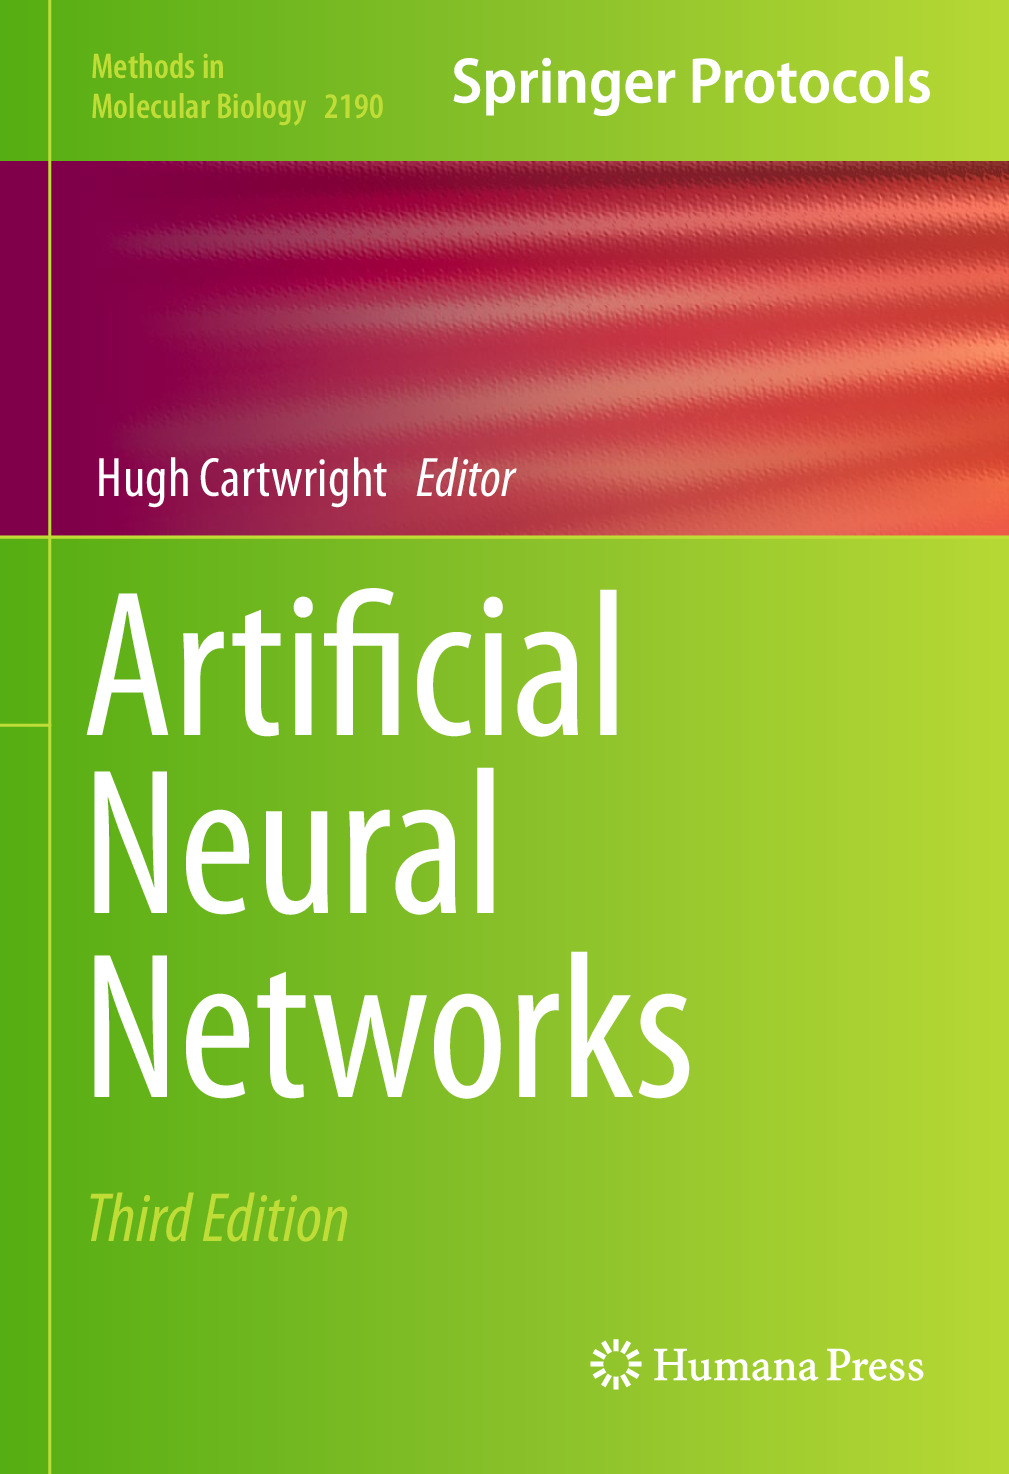 (Methods in Molecular Biology 2190) Hugh Cartwright (editor) – Artificial Neural Networks-Springer (2020)